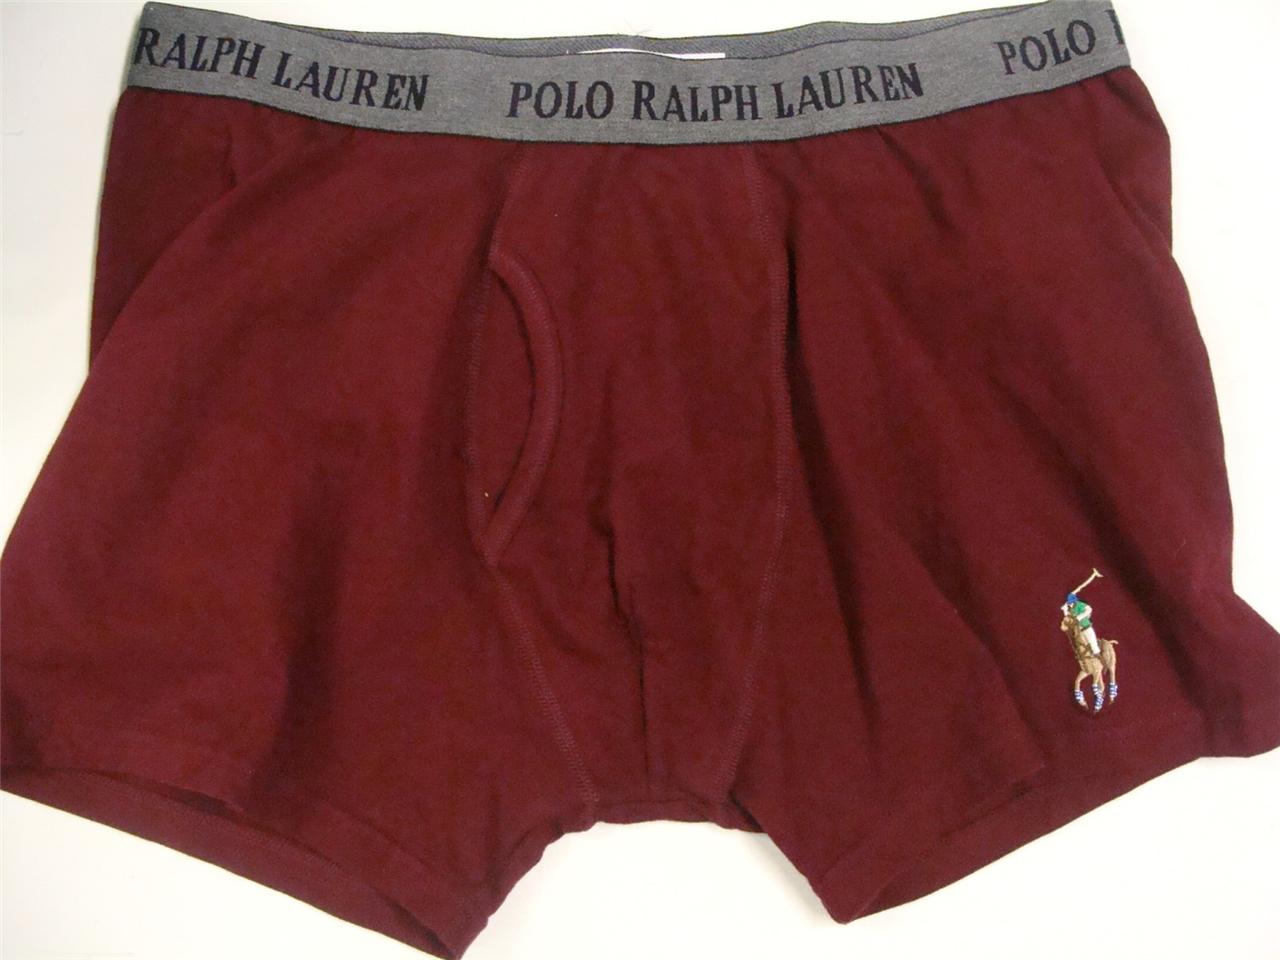 Polo Ralph Lauren Men's Boxer Shorts In Assorted Styles, Colors ...